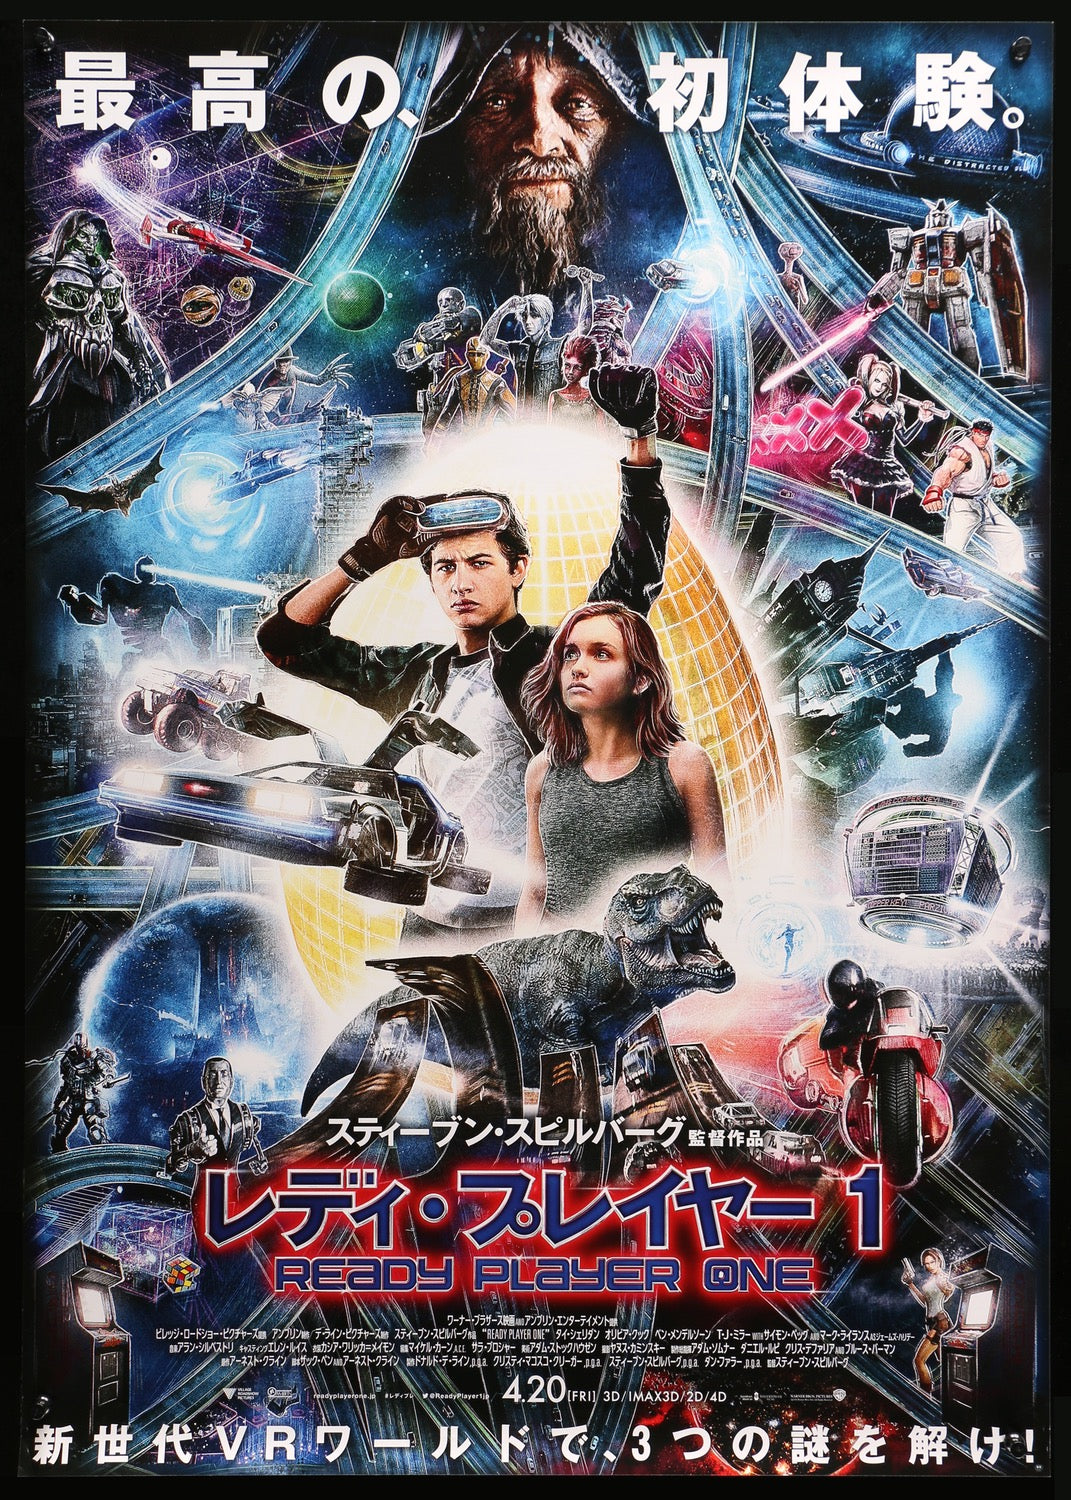 Ready Player One (2018) original movie poster for sale at Original Film Art